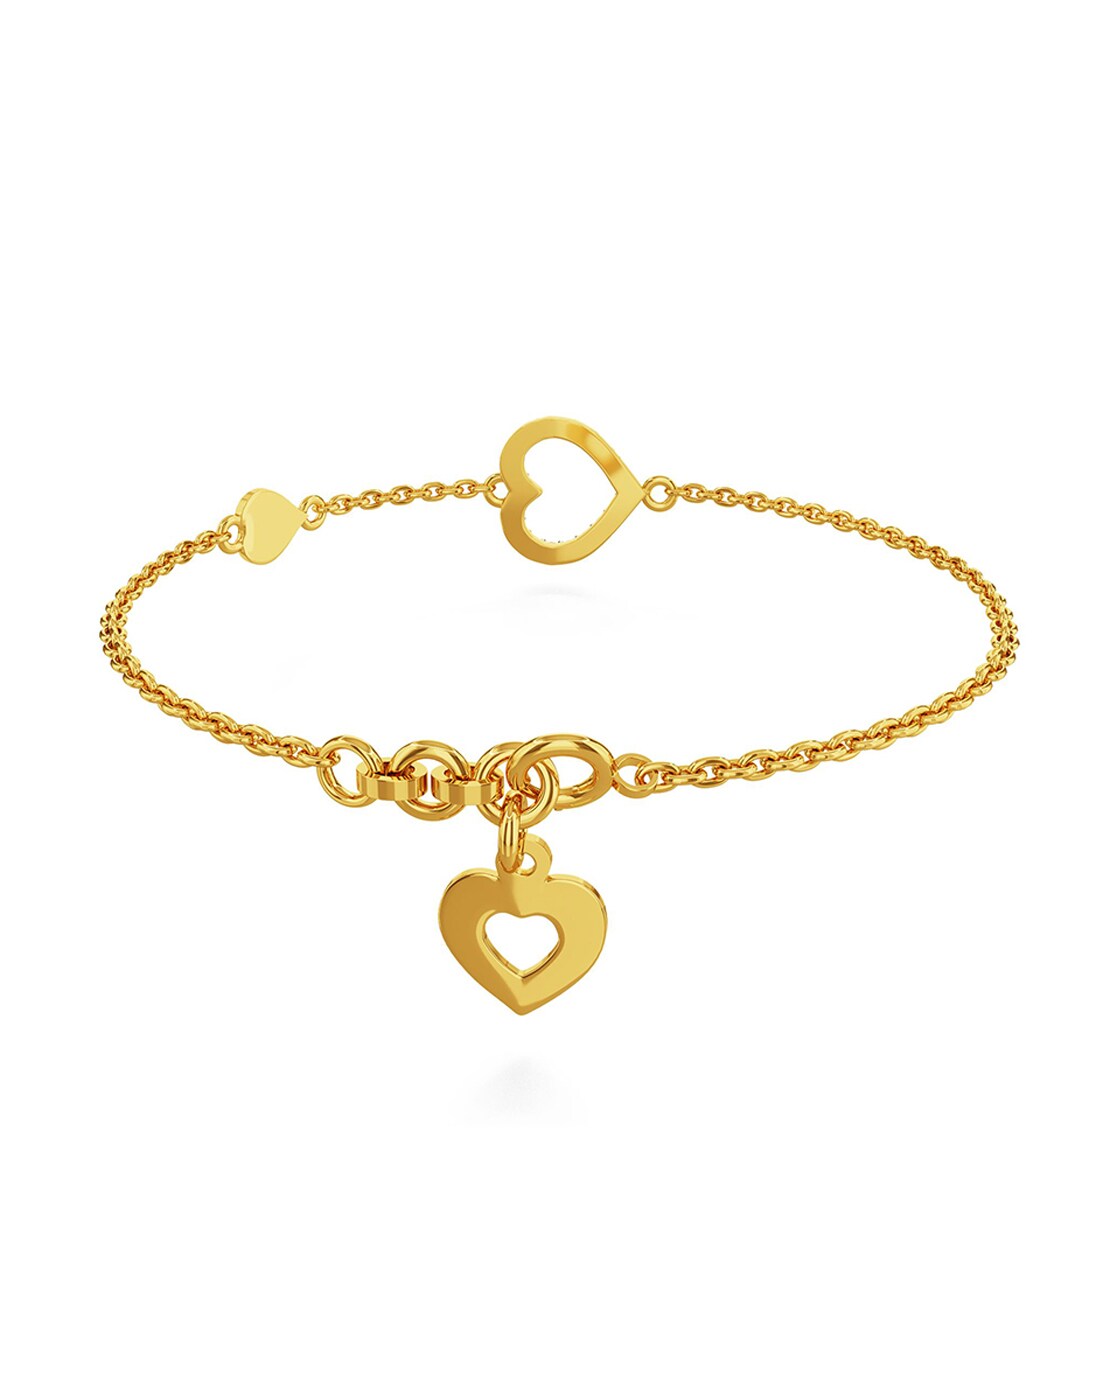 YBMYCM Love Heart Charm Bracelet 6mm Gold Beaded India